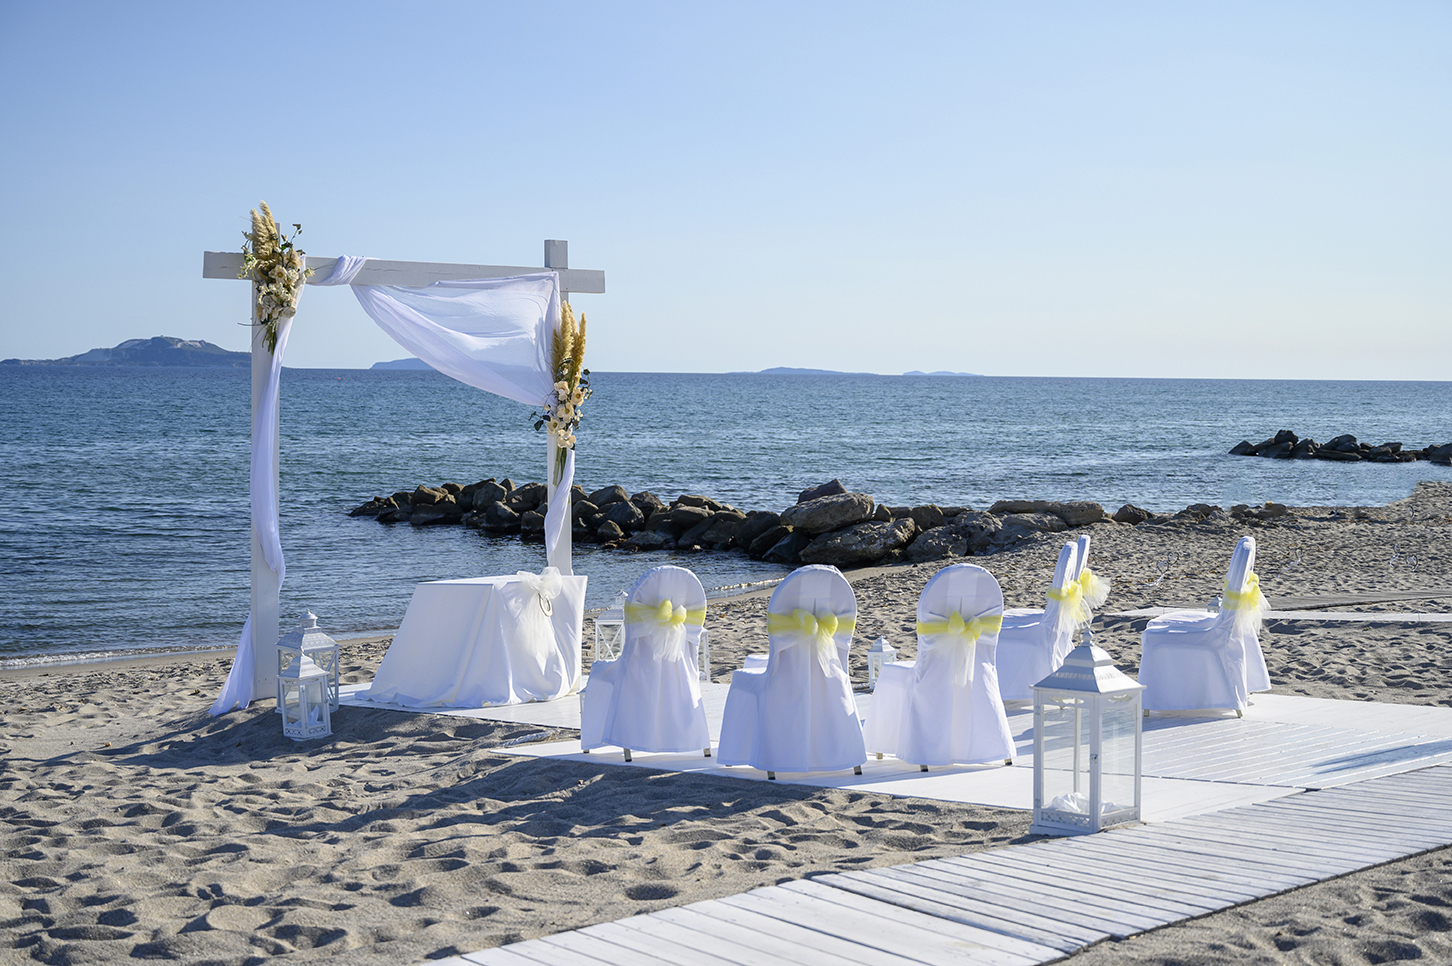 Book your wedding day in Porto Bello Beach